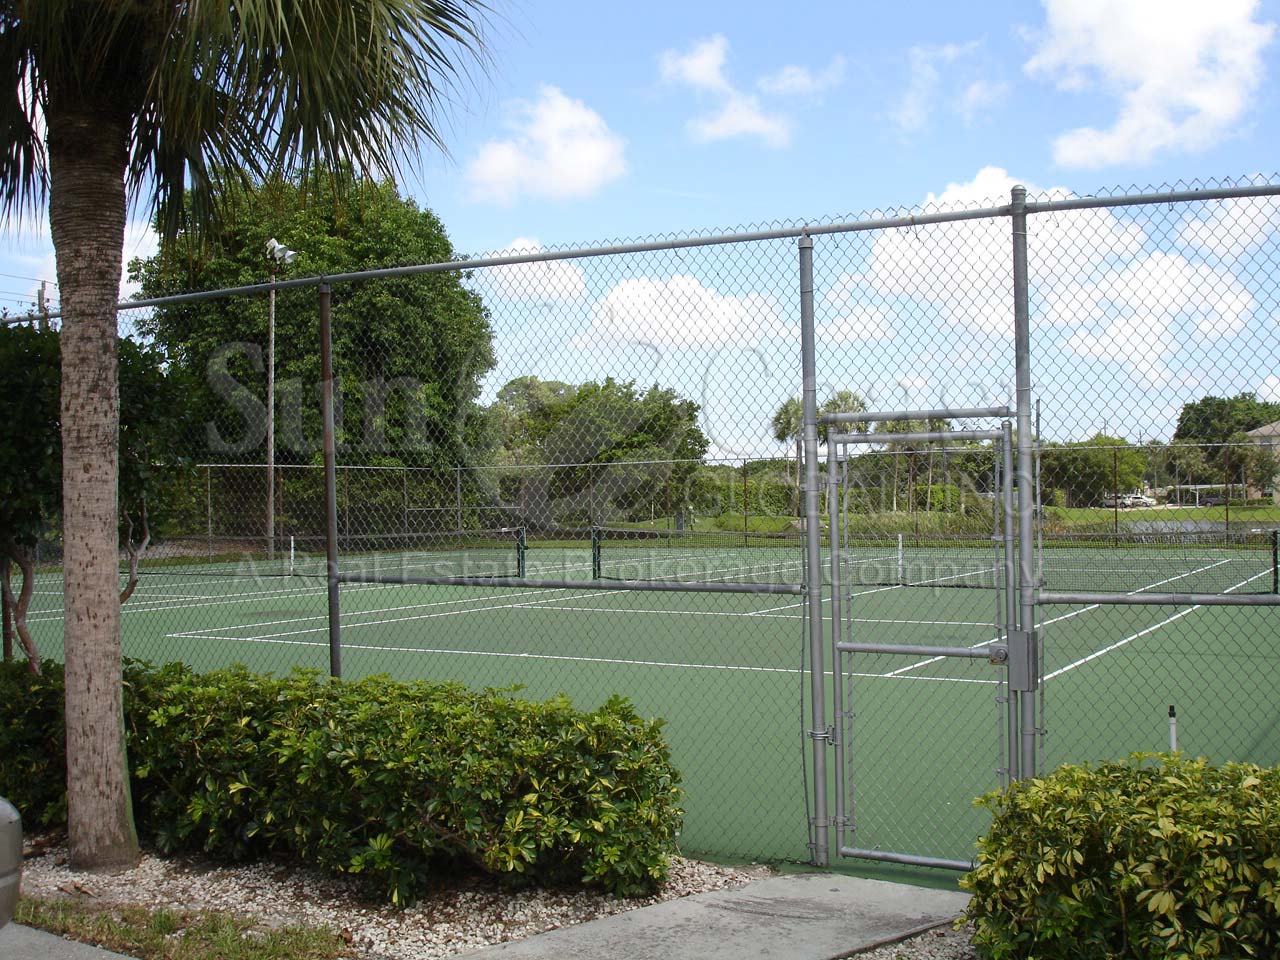 Victoria Lakes tennis courts